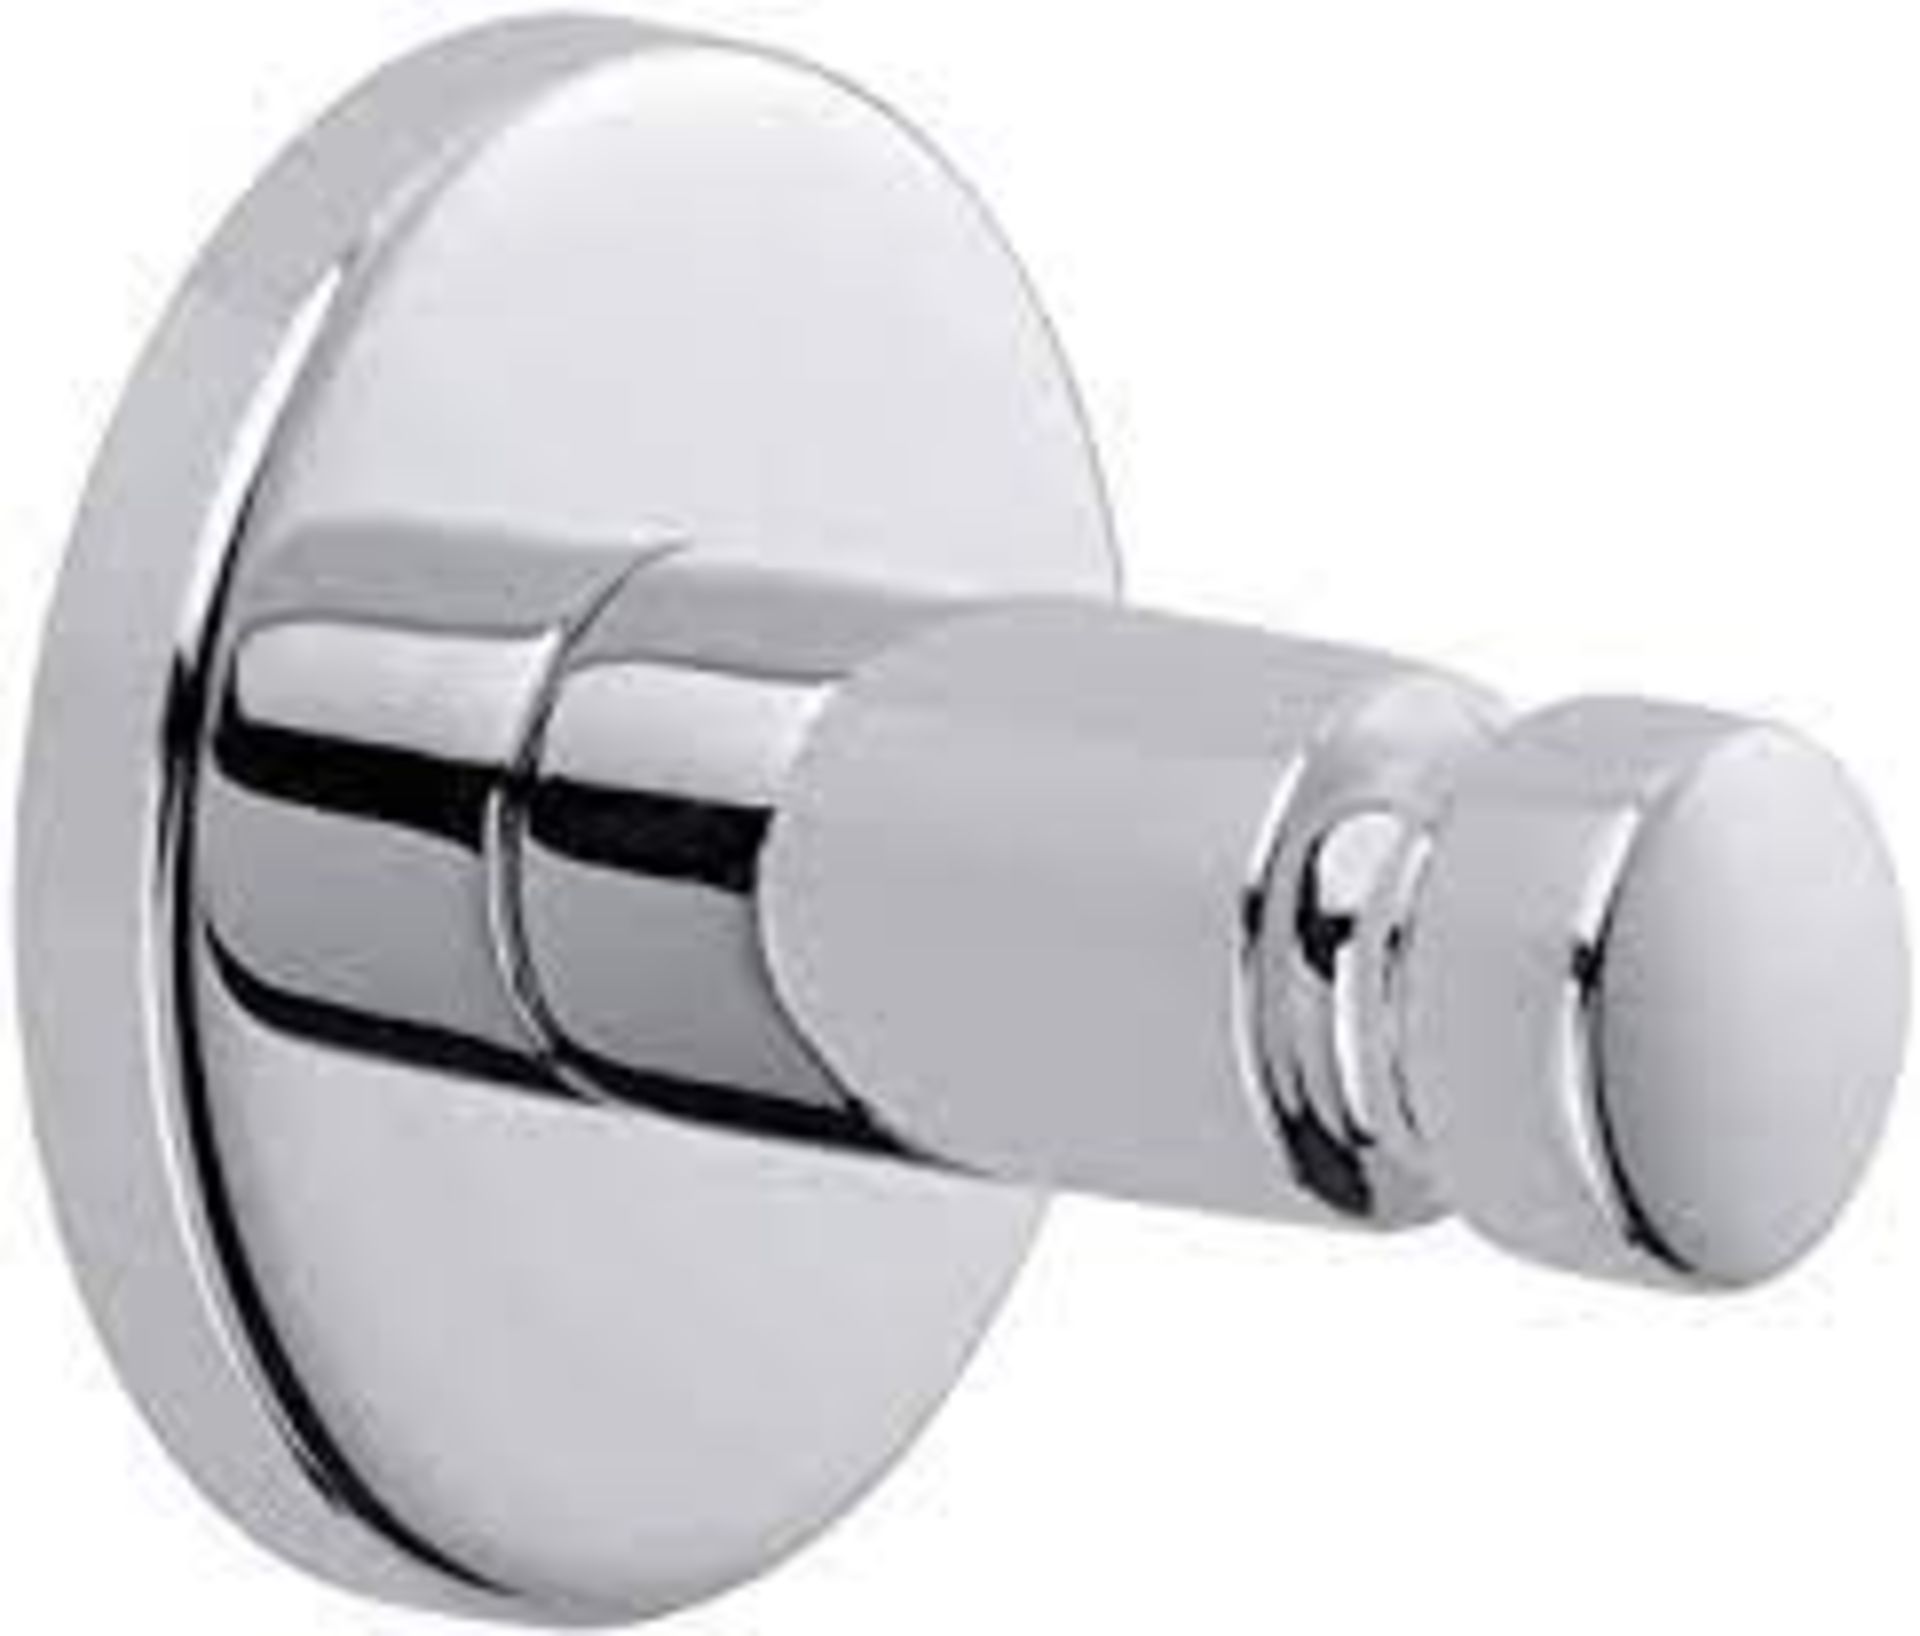 RRP-£11 tesa SMOOZ Bathroom Hook - No Drill Chromed Metal Self-Adhesive Hook for the Bathroom in Rou